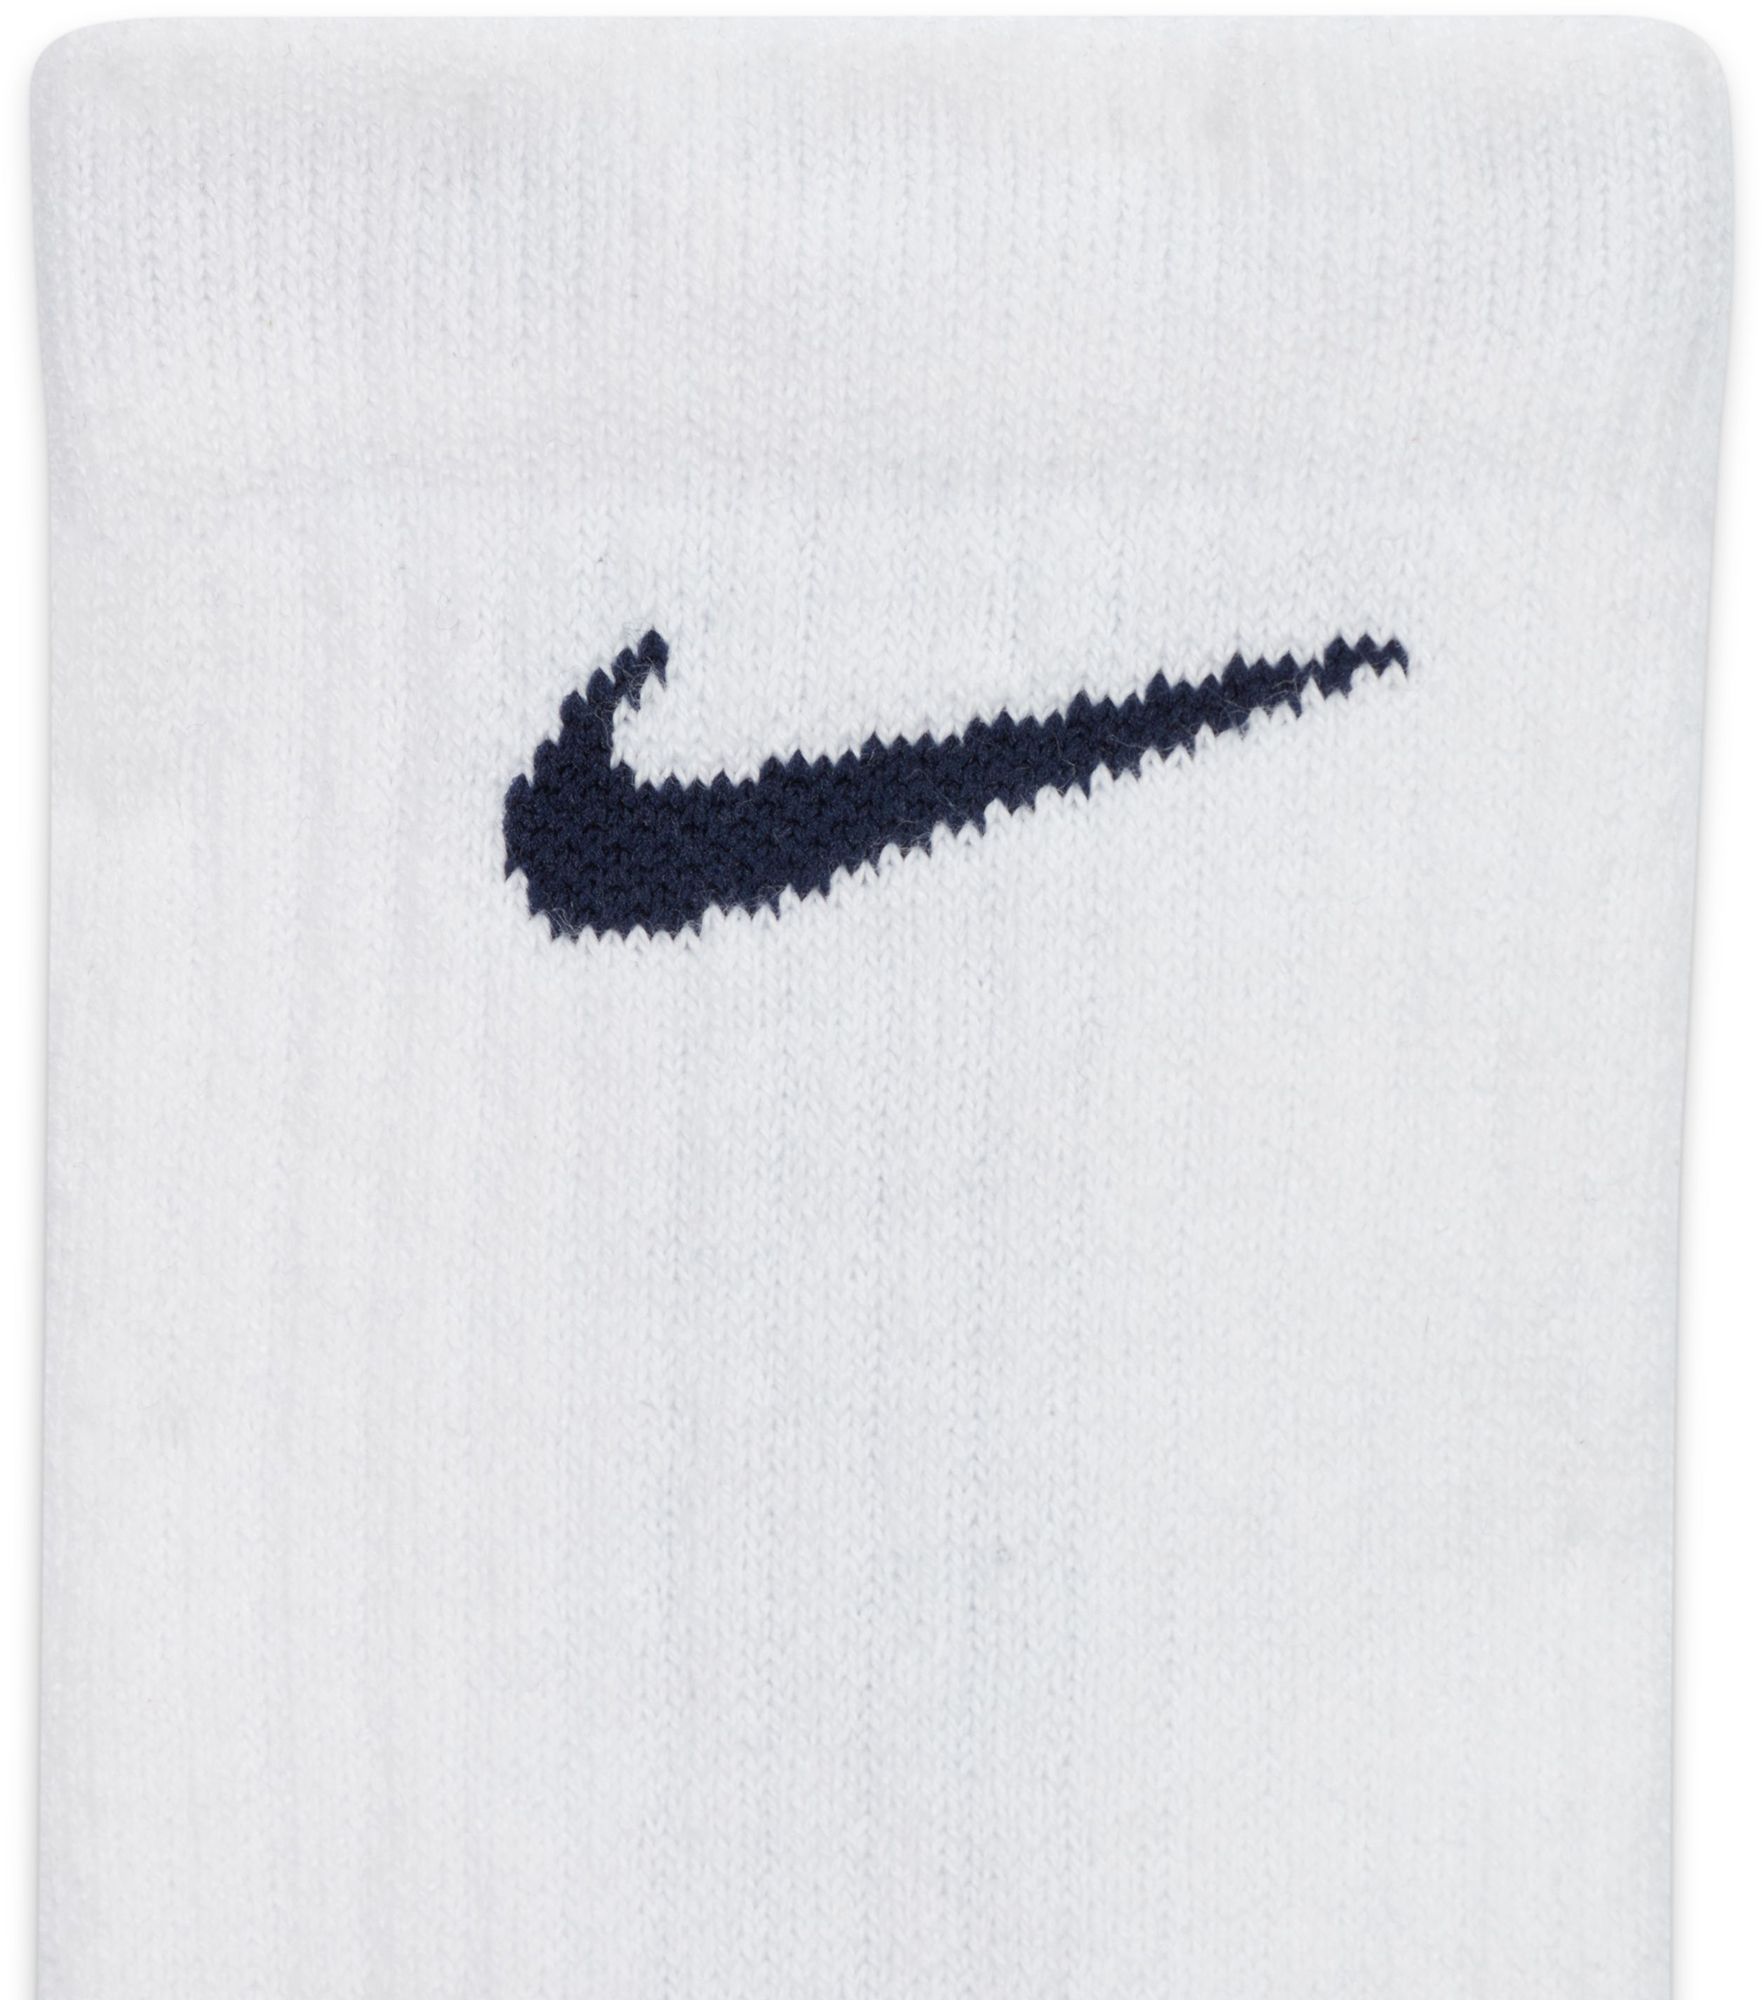 Nike Elite Basketball Crew Socks